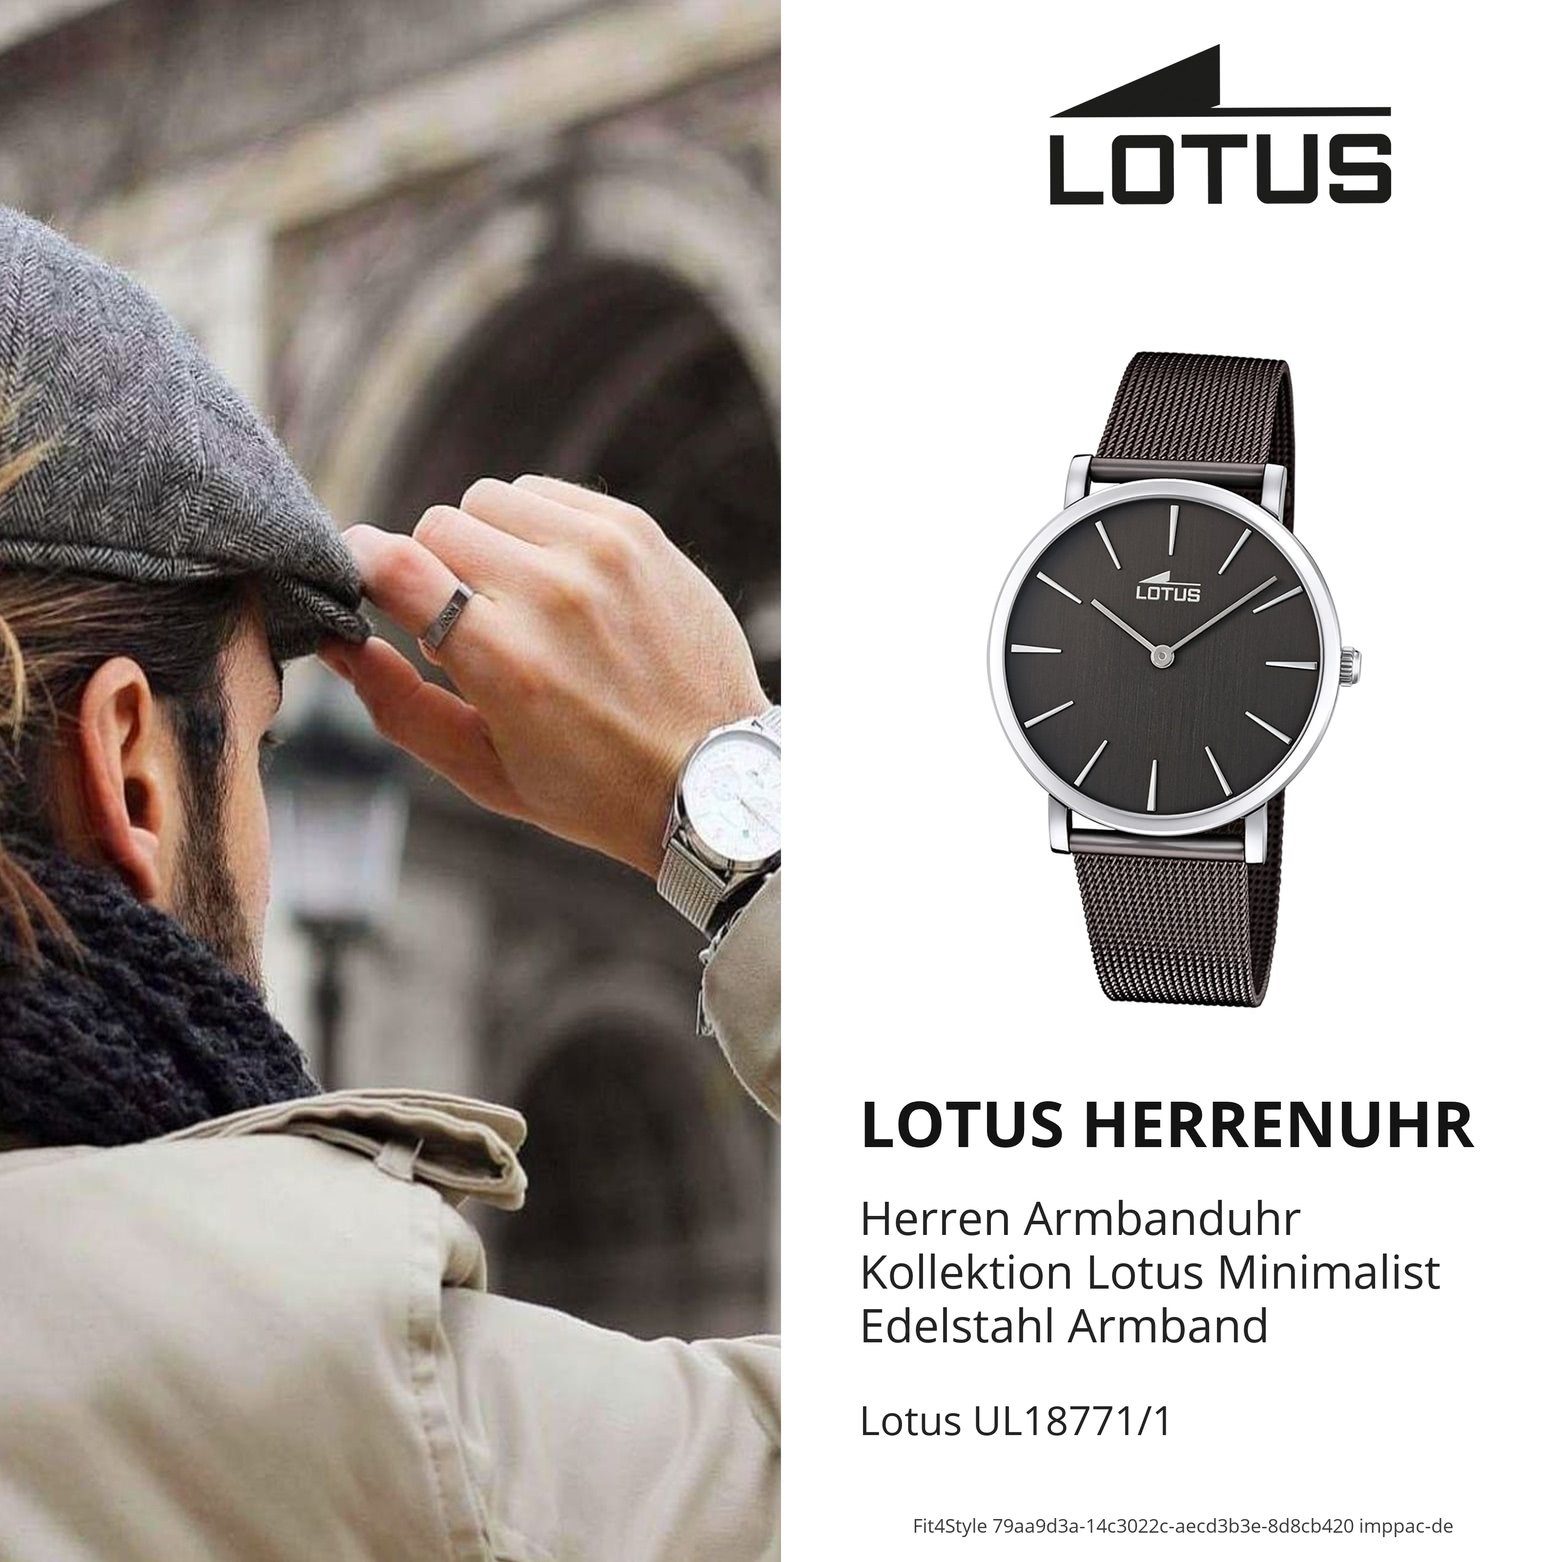 Lotus Quarzuhr Lotus Herren Armbanduhr (ca. Minimalist, 40mm) braun rund, Edelstahlarmband Herrenuhr groß